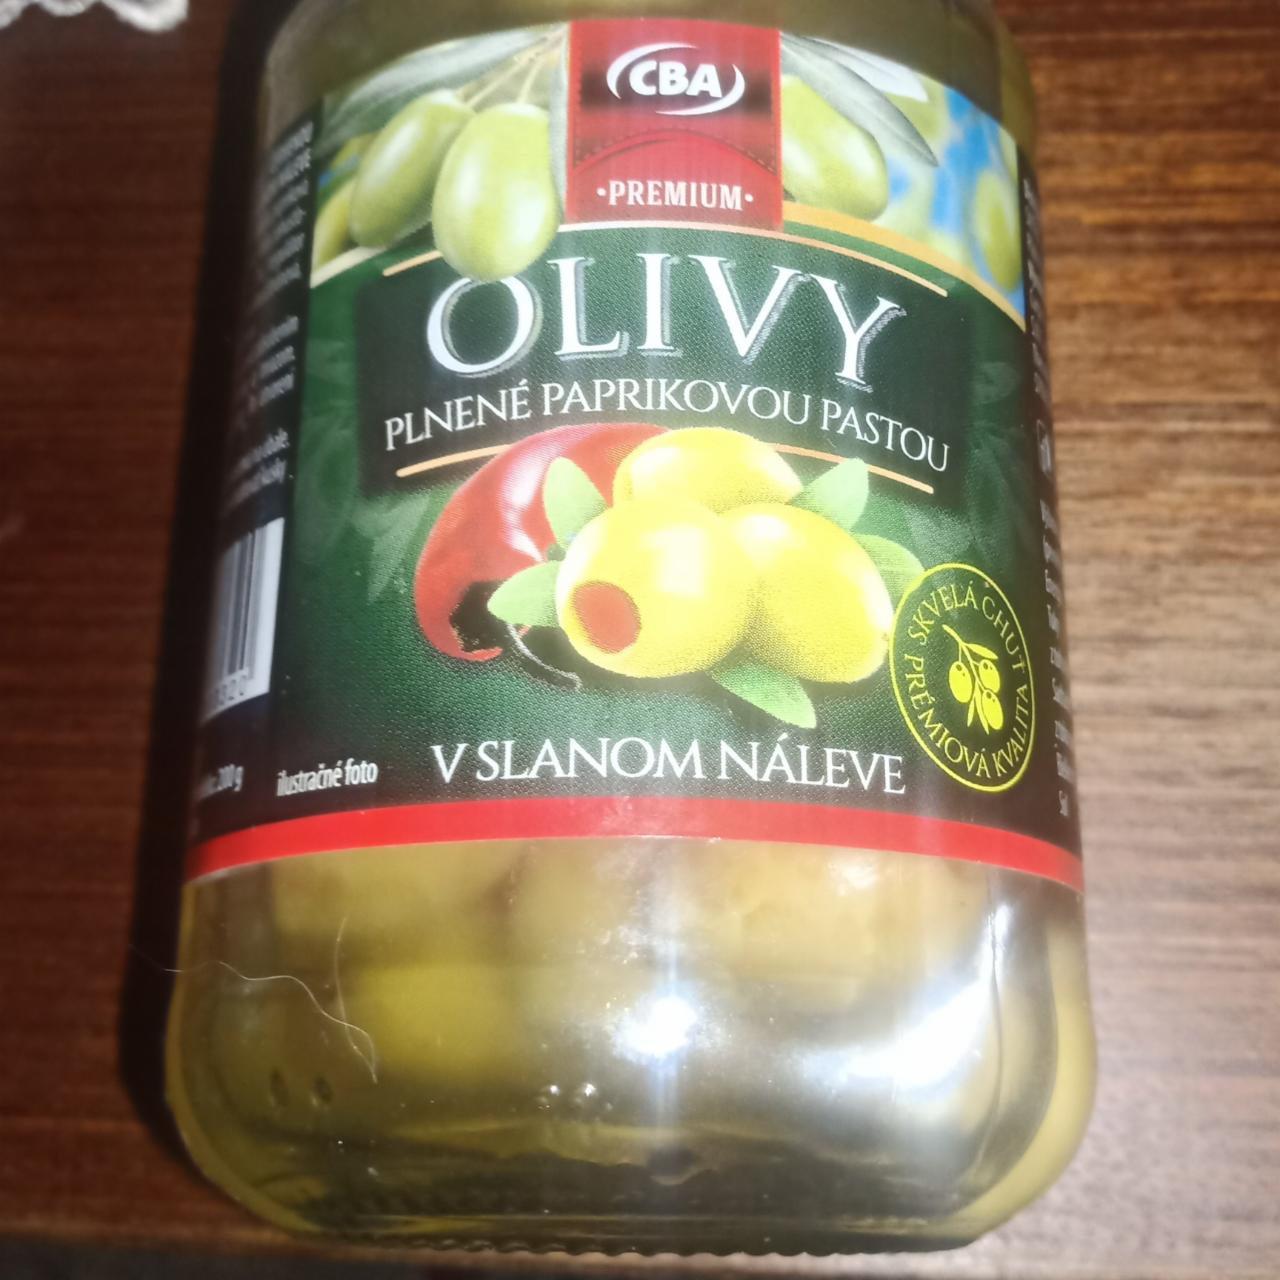 Fotografie - Olivy plnené paprikovou pastou CBA Premium